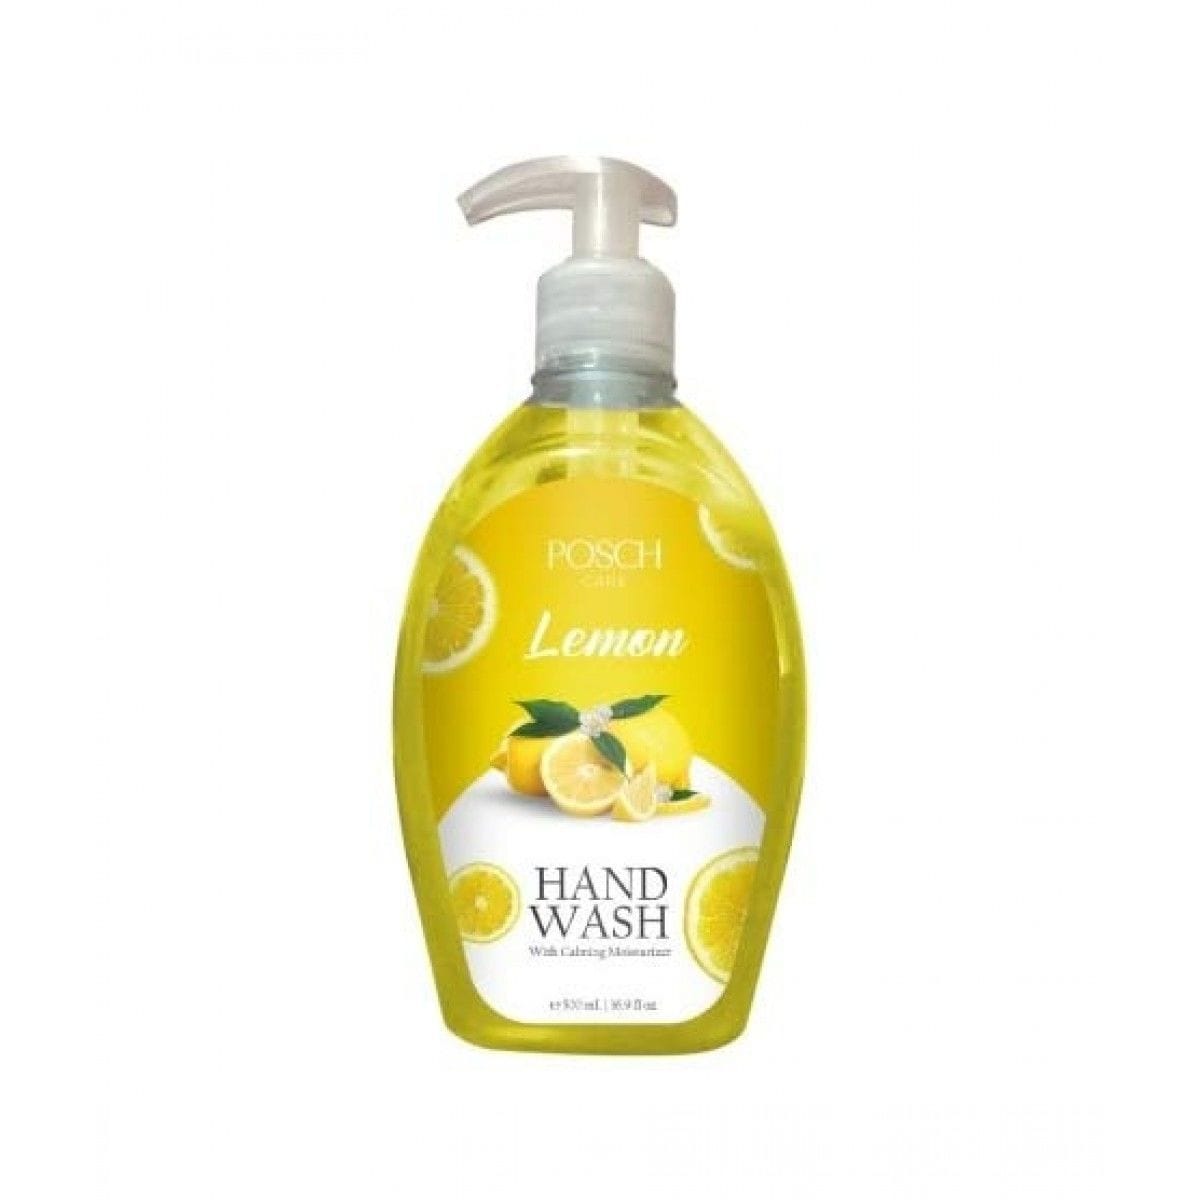 Posch Care Lemon Hand wash 500ML